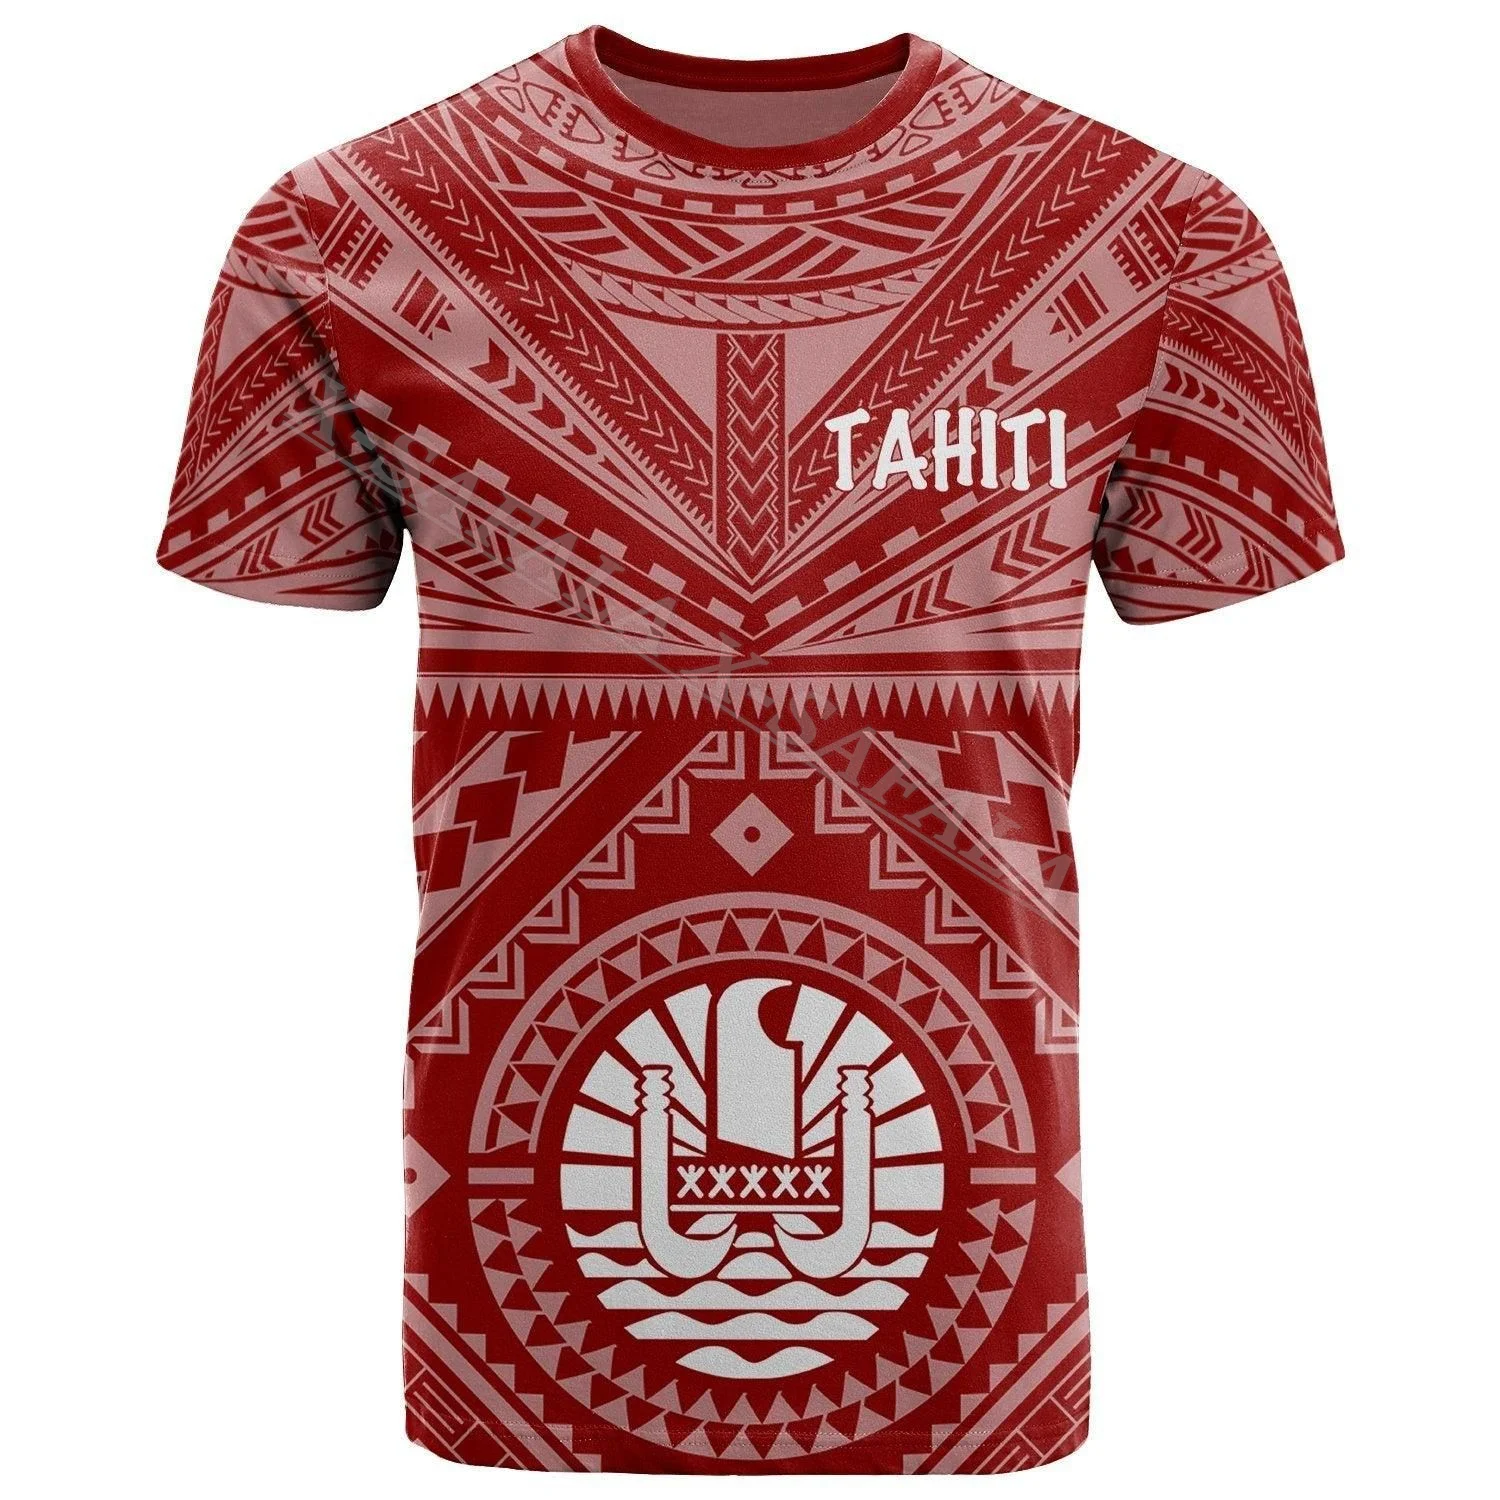 

Tahiti Polynesian Tribal Tattoo 3D Printed Summer Casual T-shirt Short Sleeved Sportswear Top Cool Men Women Daily Clothing